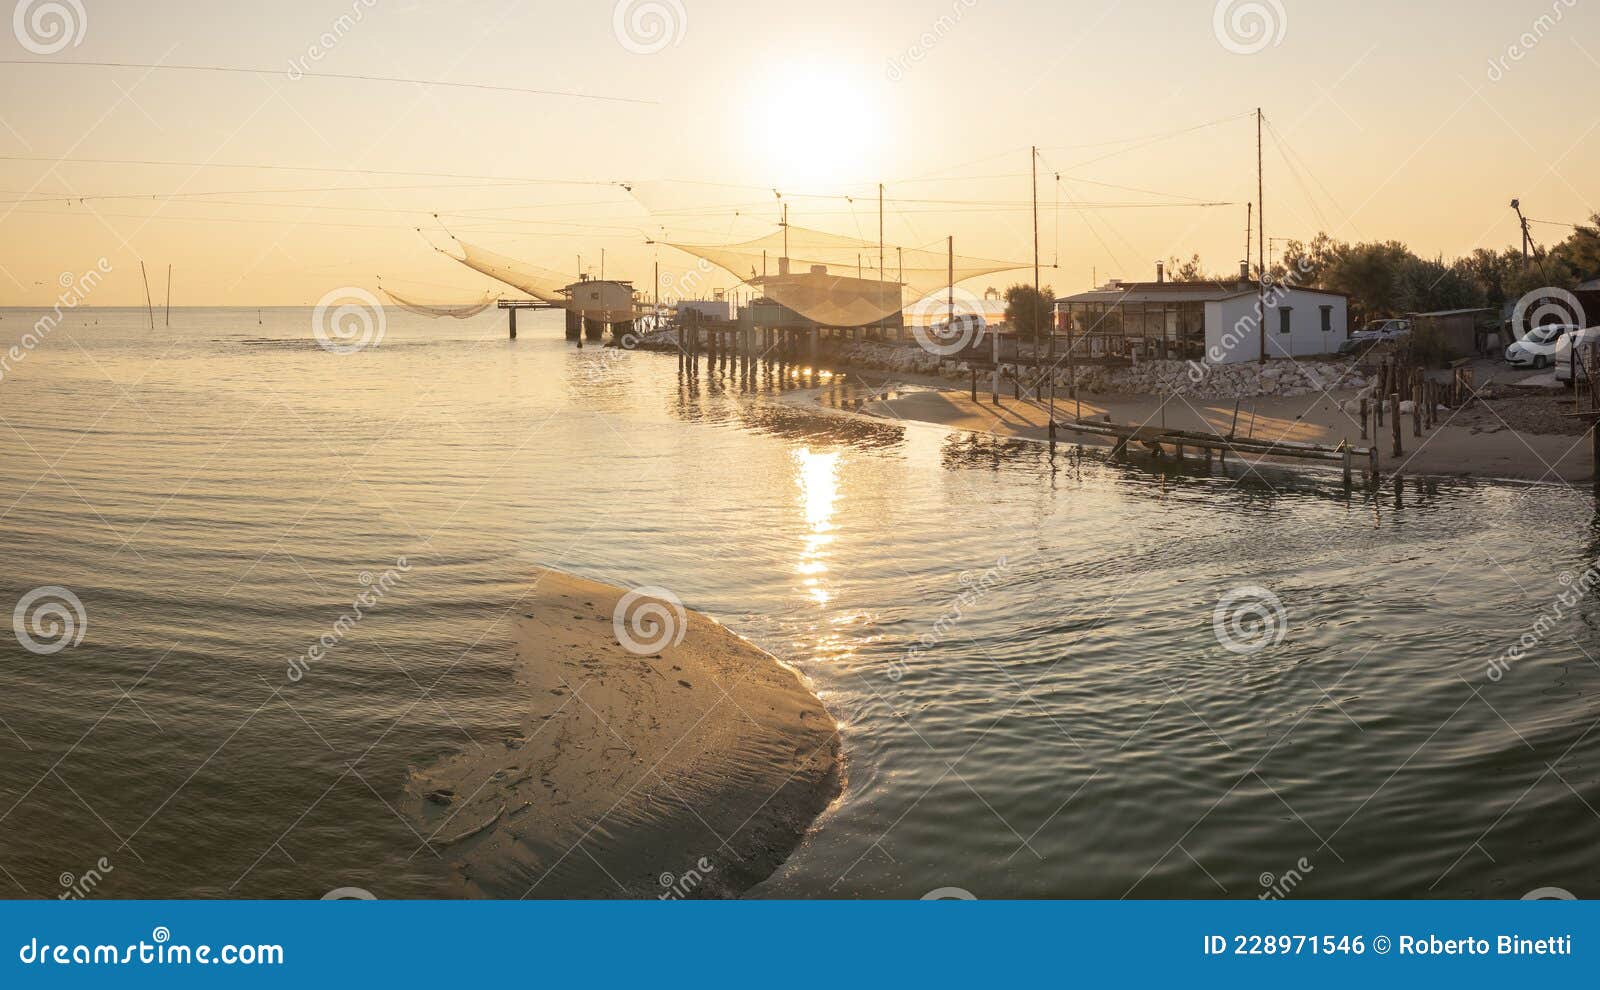 fishing huts in adriatic coast at sunrise